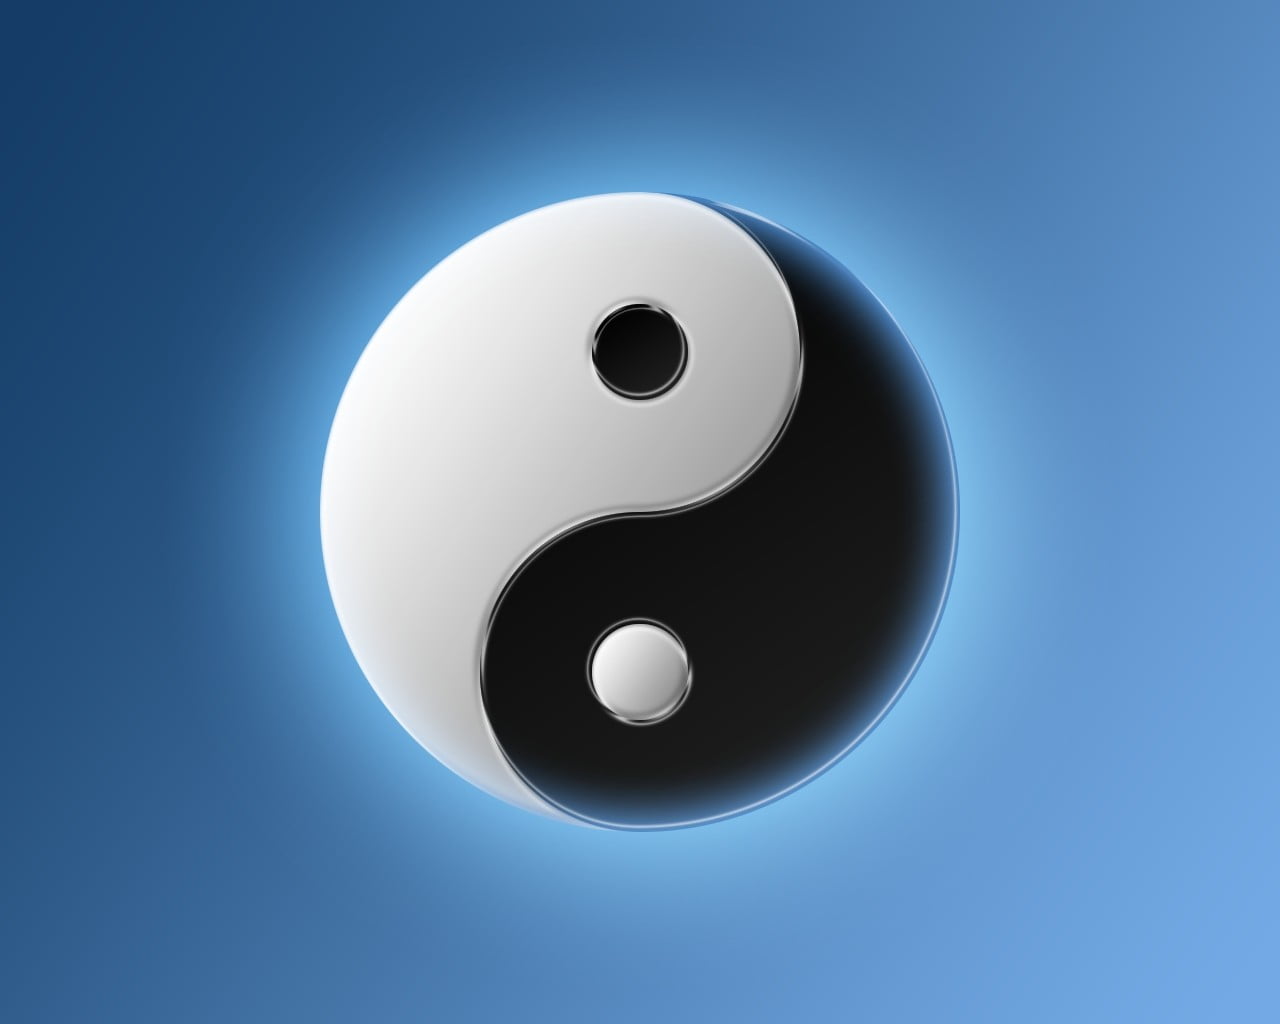 Yin and Yang symbol, symbols, blue background, colored background